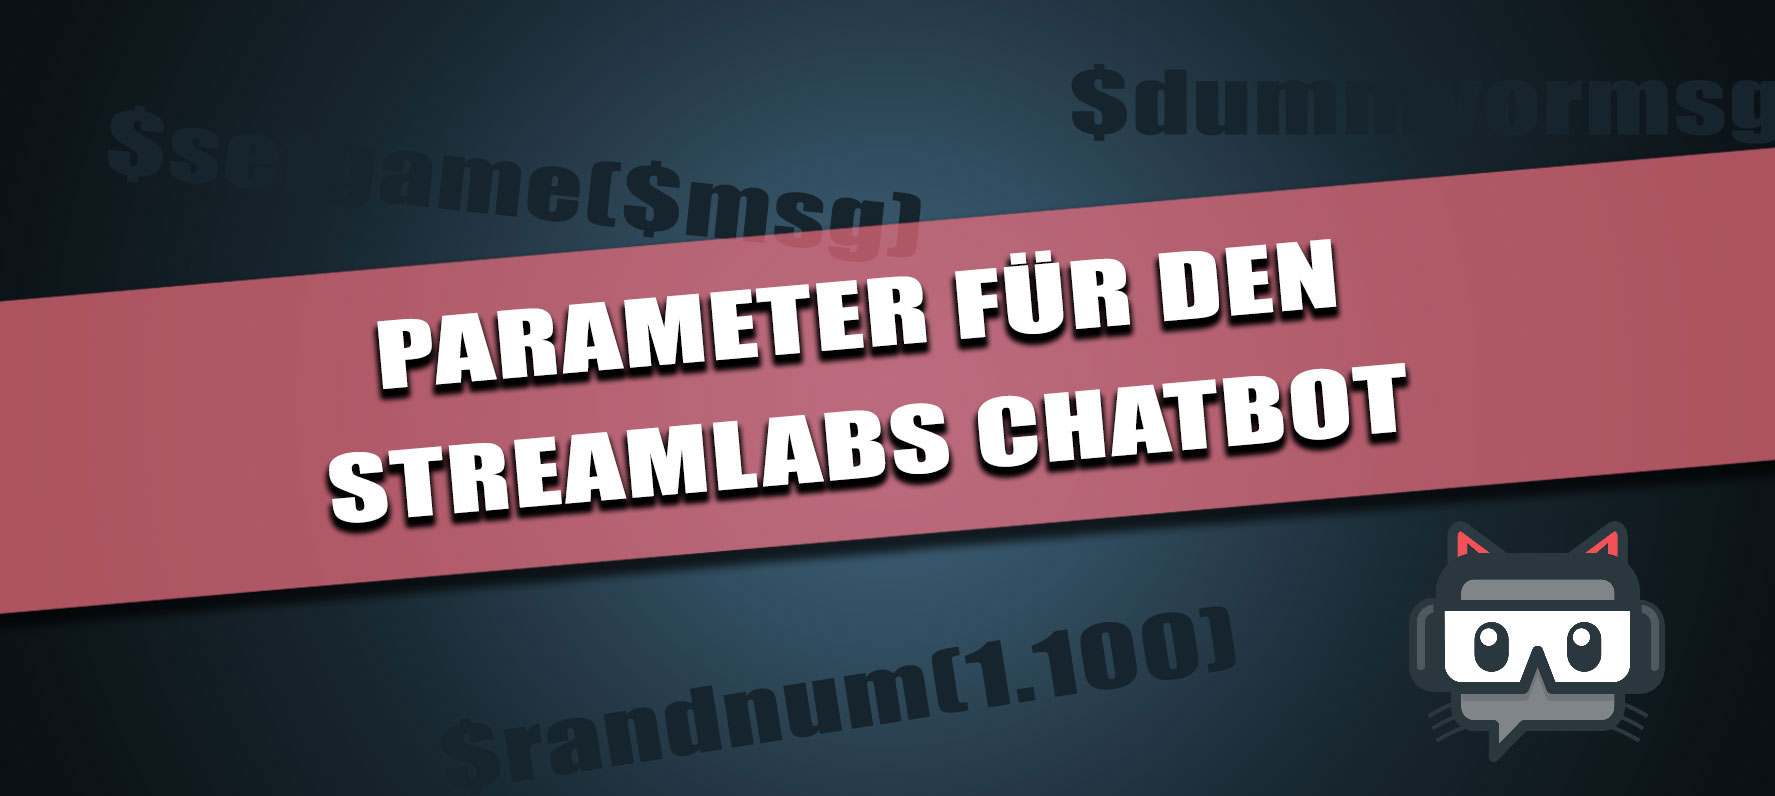 Streamlabs Chatbot Parameter Header